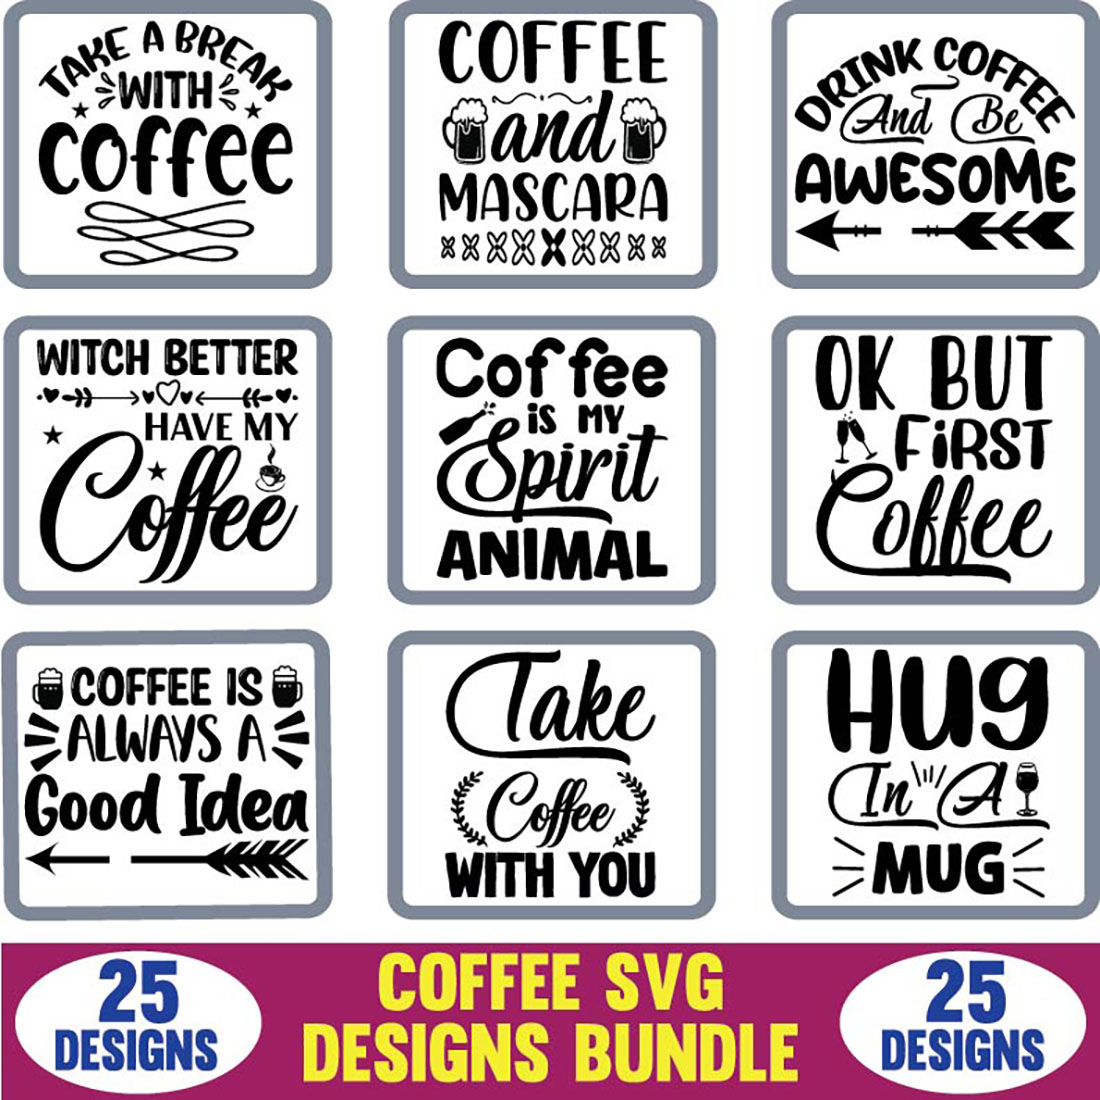 Coffee SVG Designs Bundle main cover.